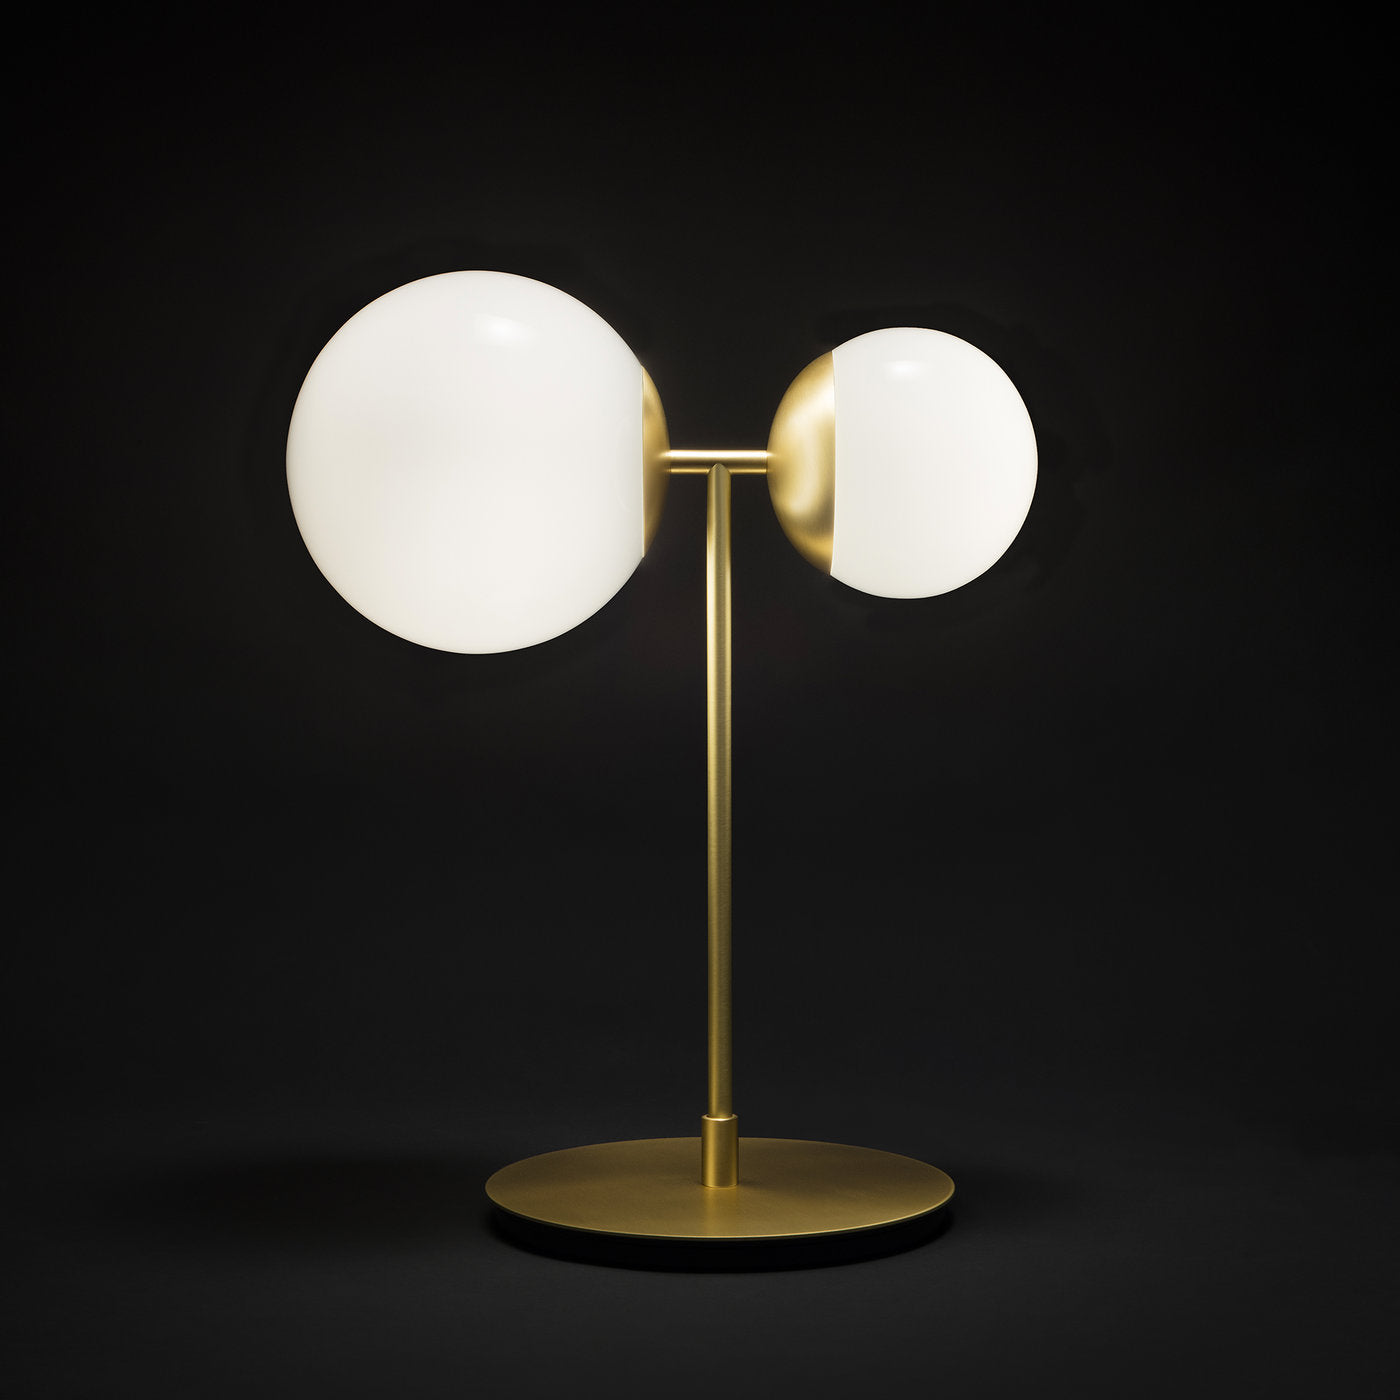 Biba Table Lamp by Lorenza Bozzoli - Alternative view 3